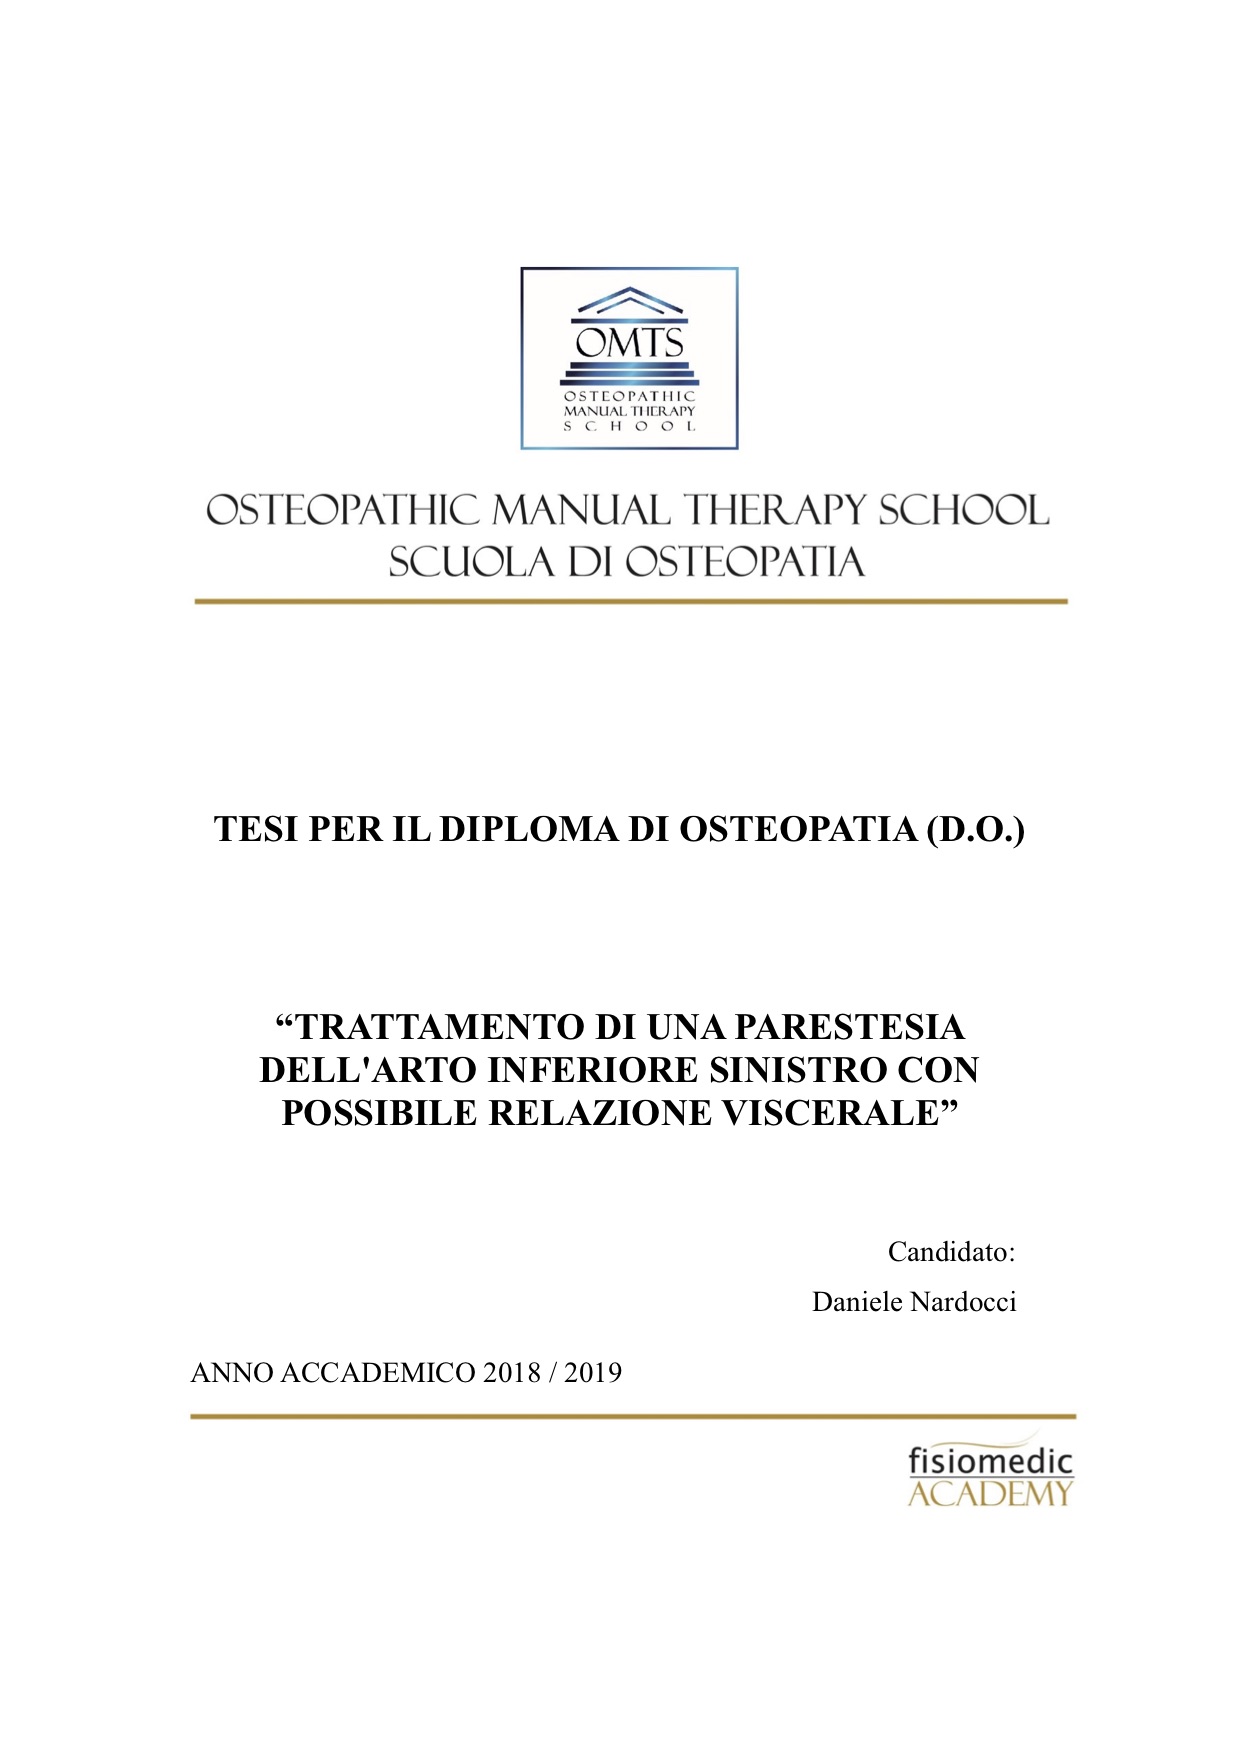 Daniele Nardocci Tesi Diploma Osteopatia 2019